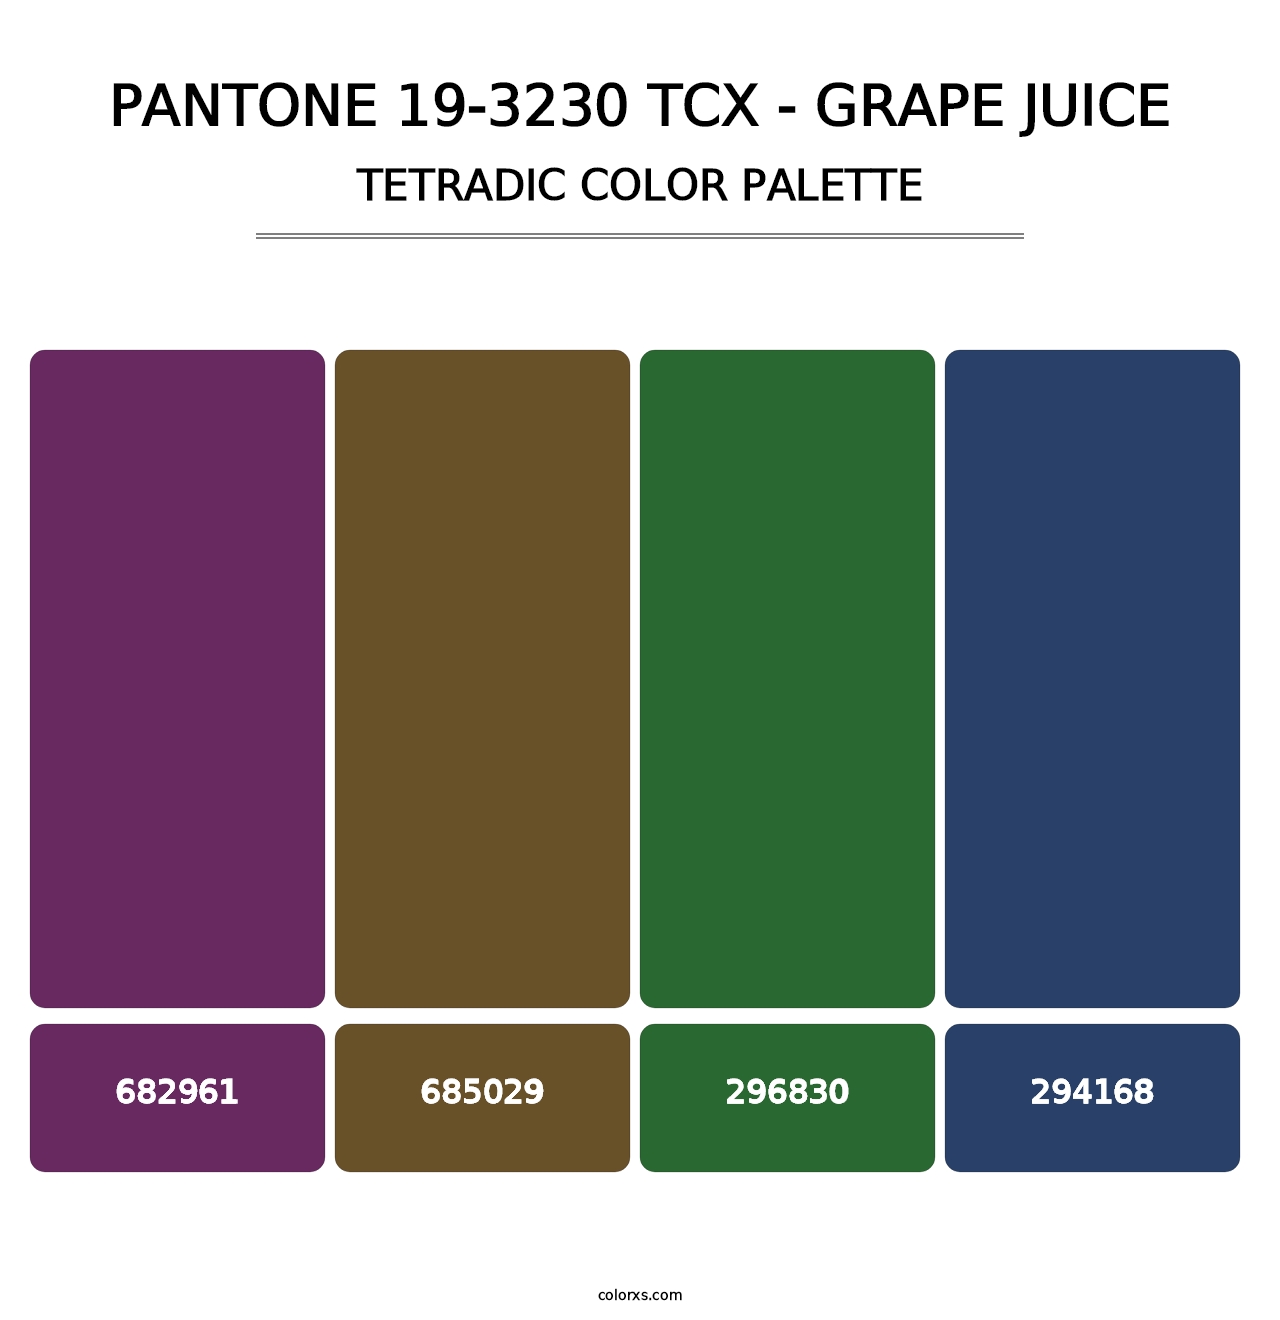 PANTONE 19-3230 TCX - Grape Juice - Tetradic Color Palette